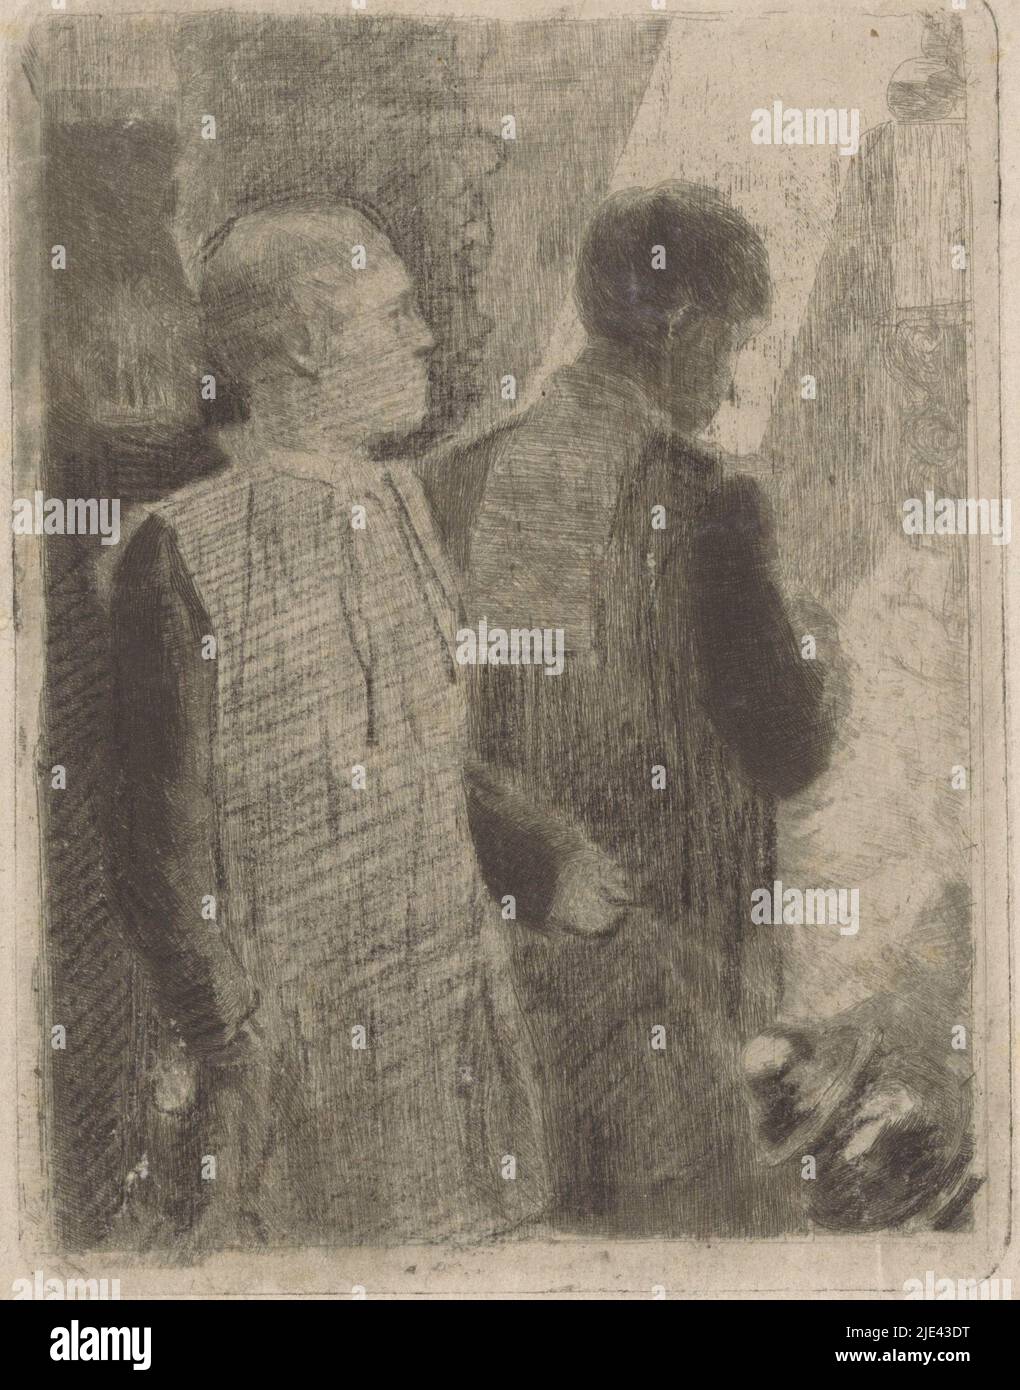 Two children, Marinus van der Maarel, 1867 - 1913, Two children in gown, possibly choirboys., print maker: Marinus van der Maarel, 1867 - 1913, paper, etching, h 158 mm × w 120 mm Stock Photo